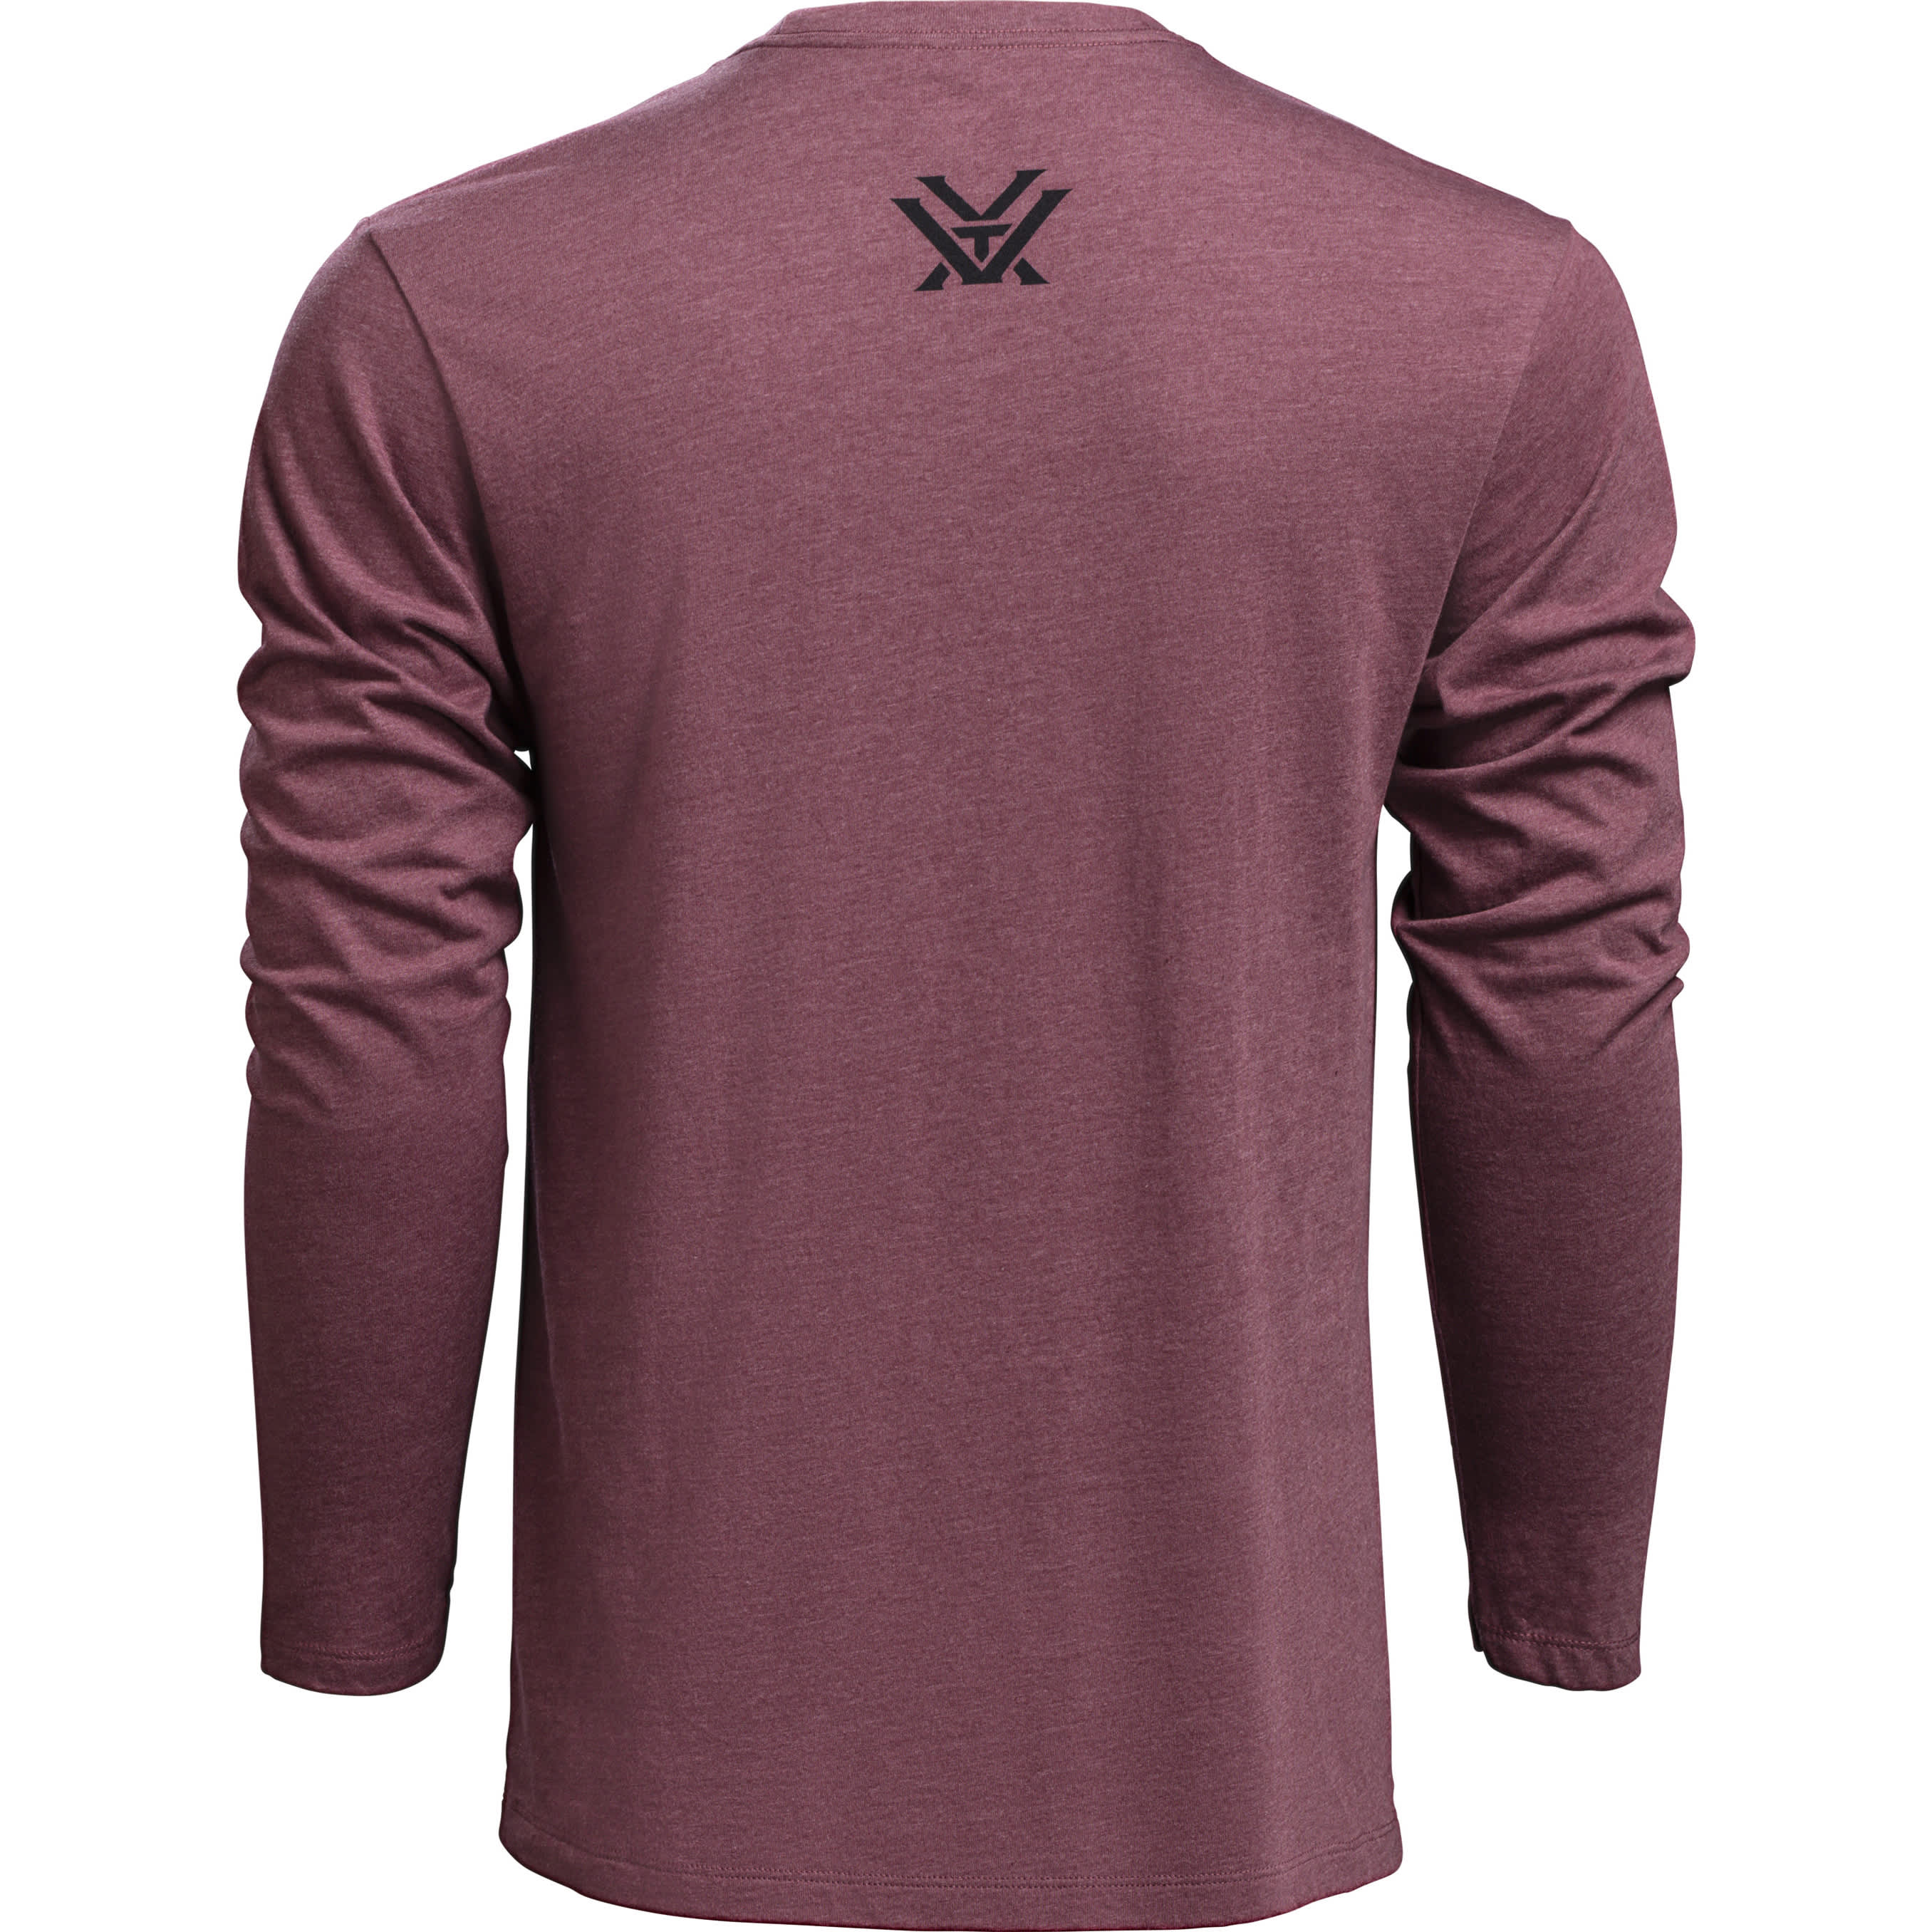 Vortex® Men’s Core Logo Long-Sleeve T-Shirt